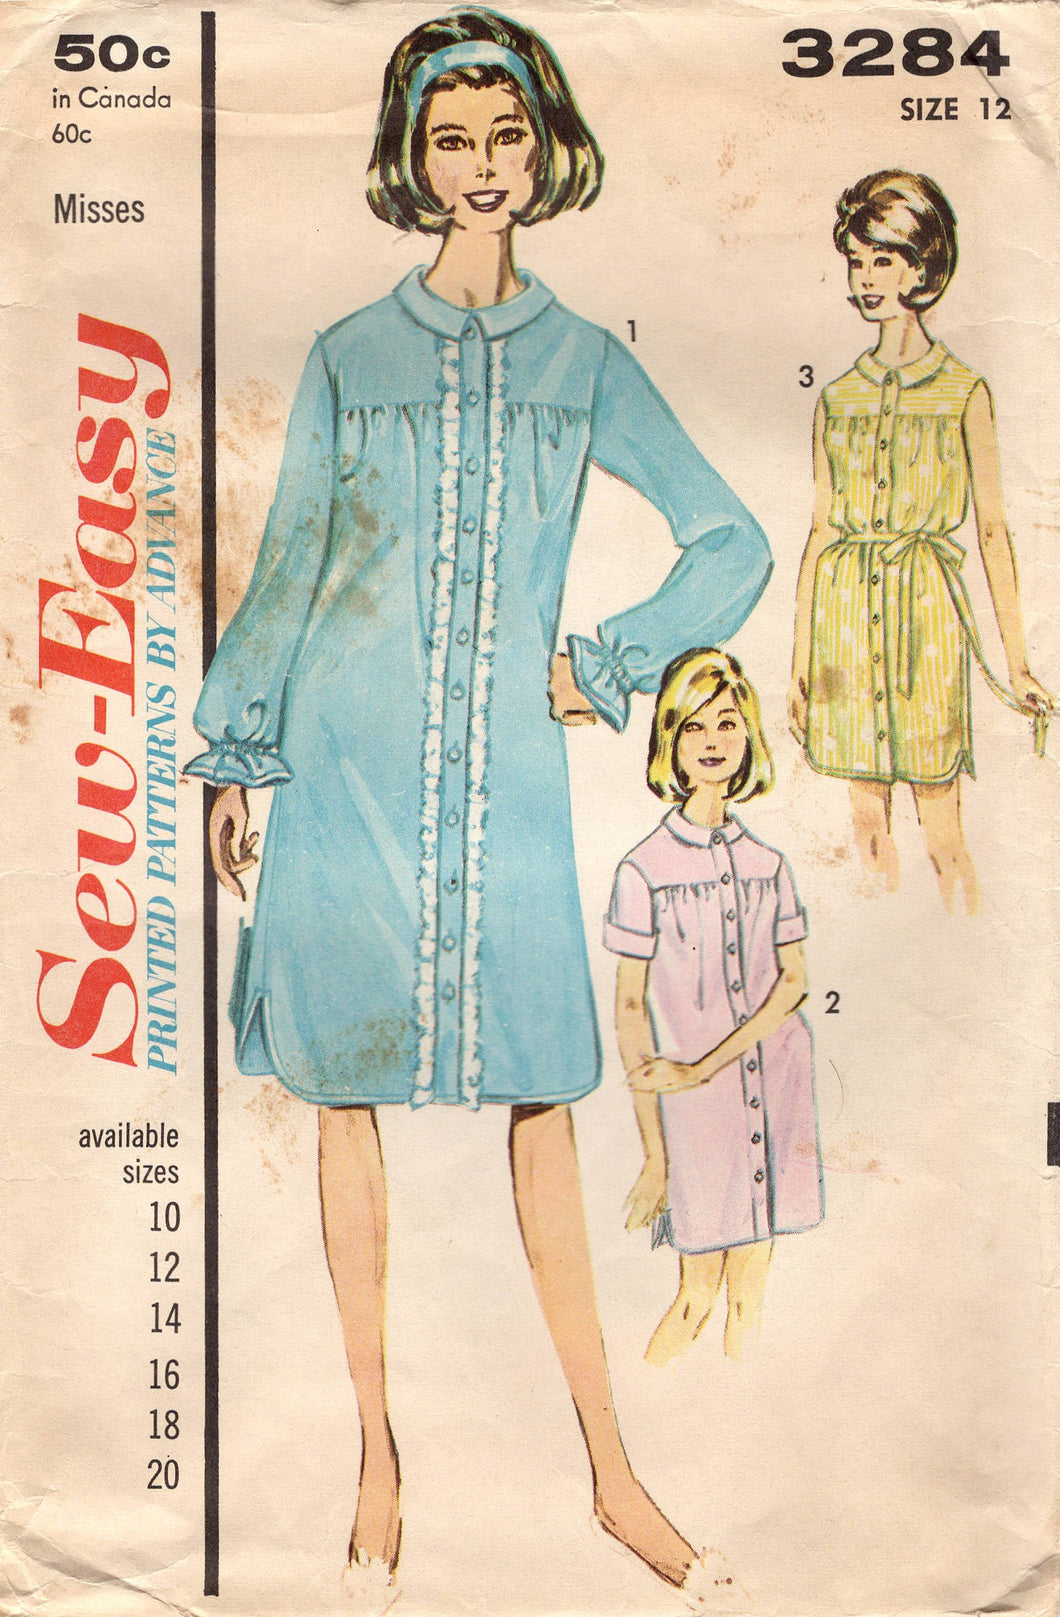 1960's Advance Button Up Night Shirt pattern - Bust 32